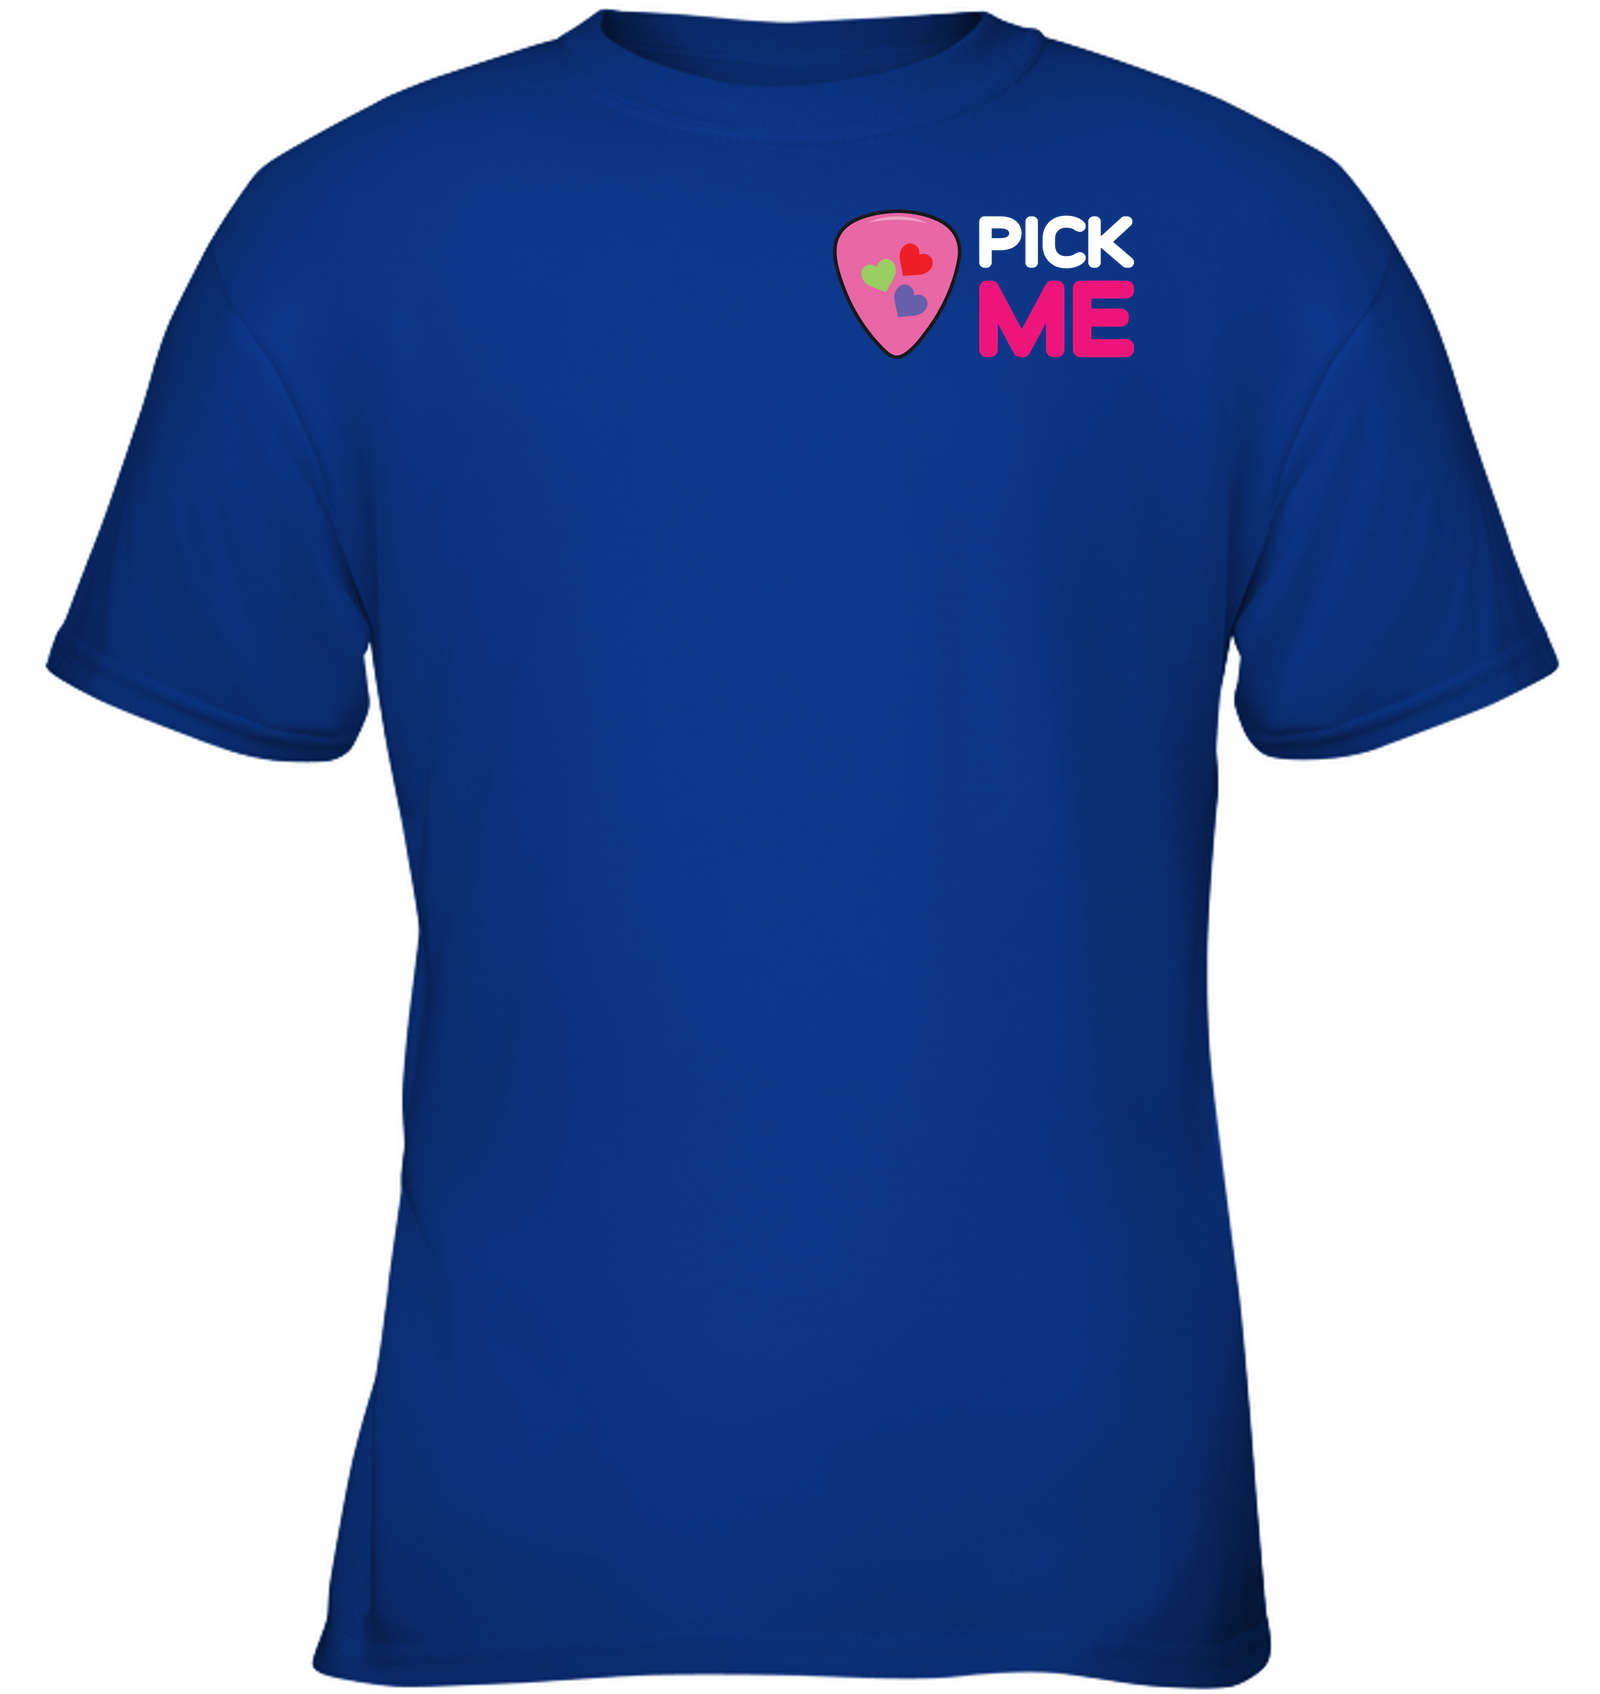 Pick Me (Pocket Size) - Gildan Youth Short Sleeve T-Shirt